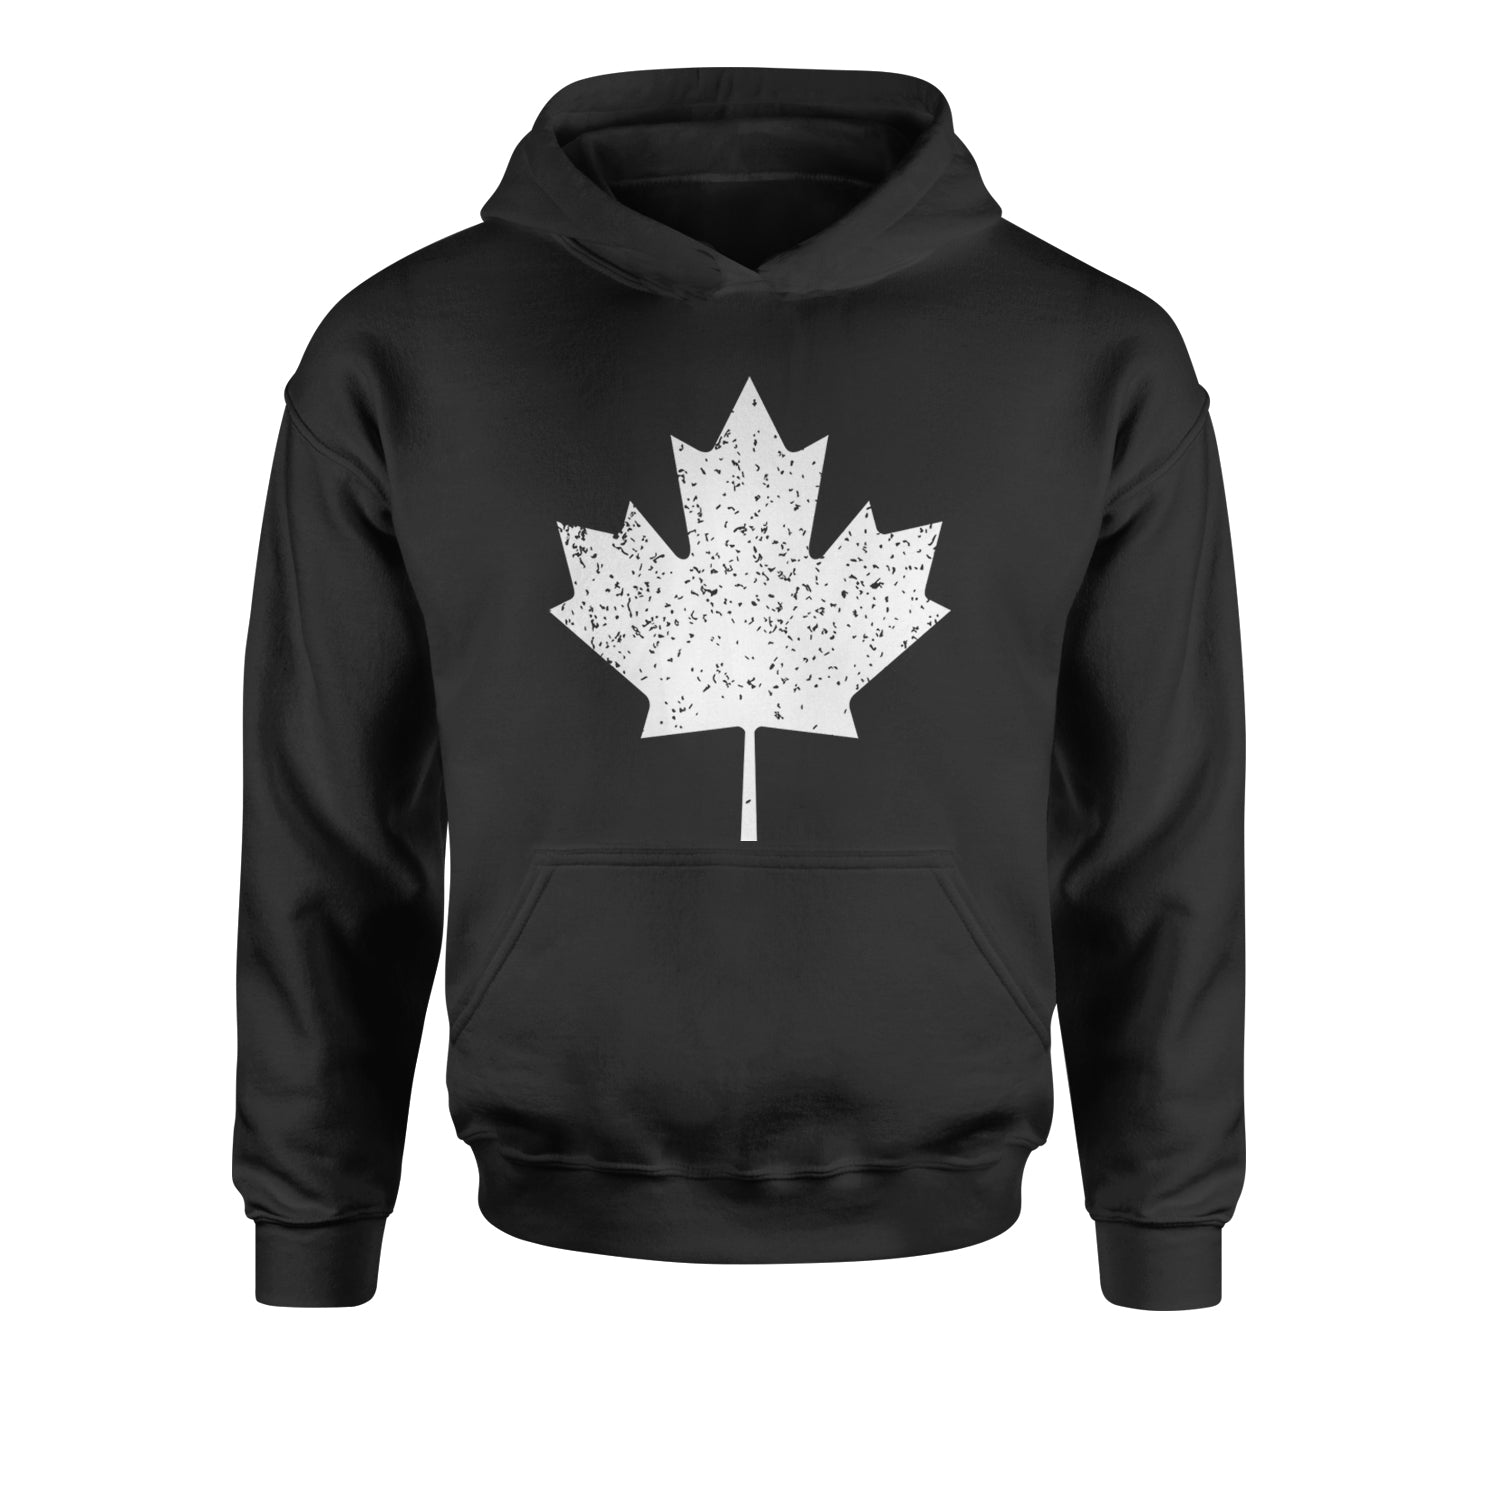 Canada Maple Leaf Youth-Sized Hoodie